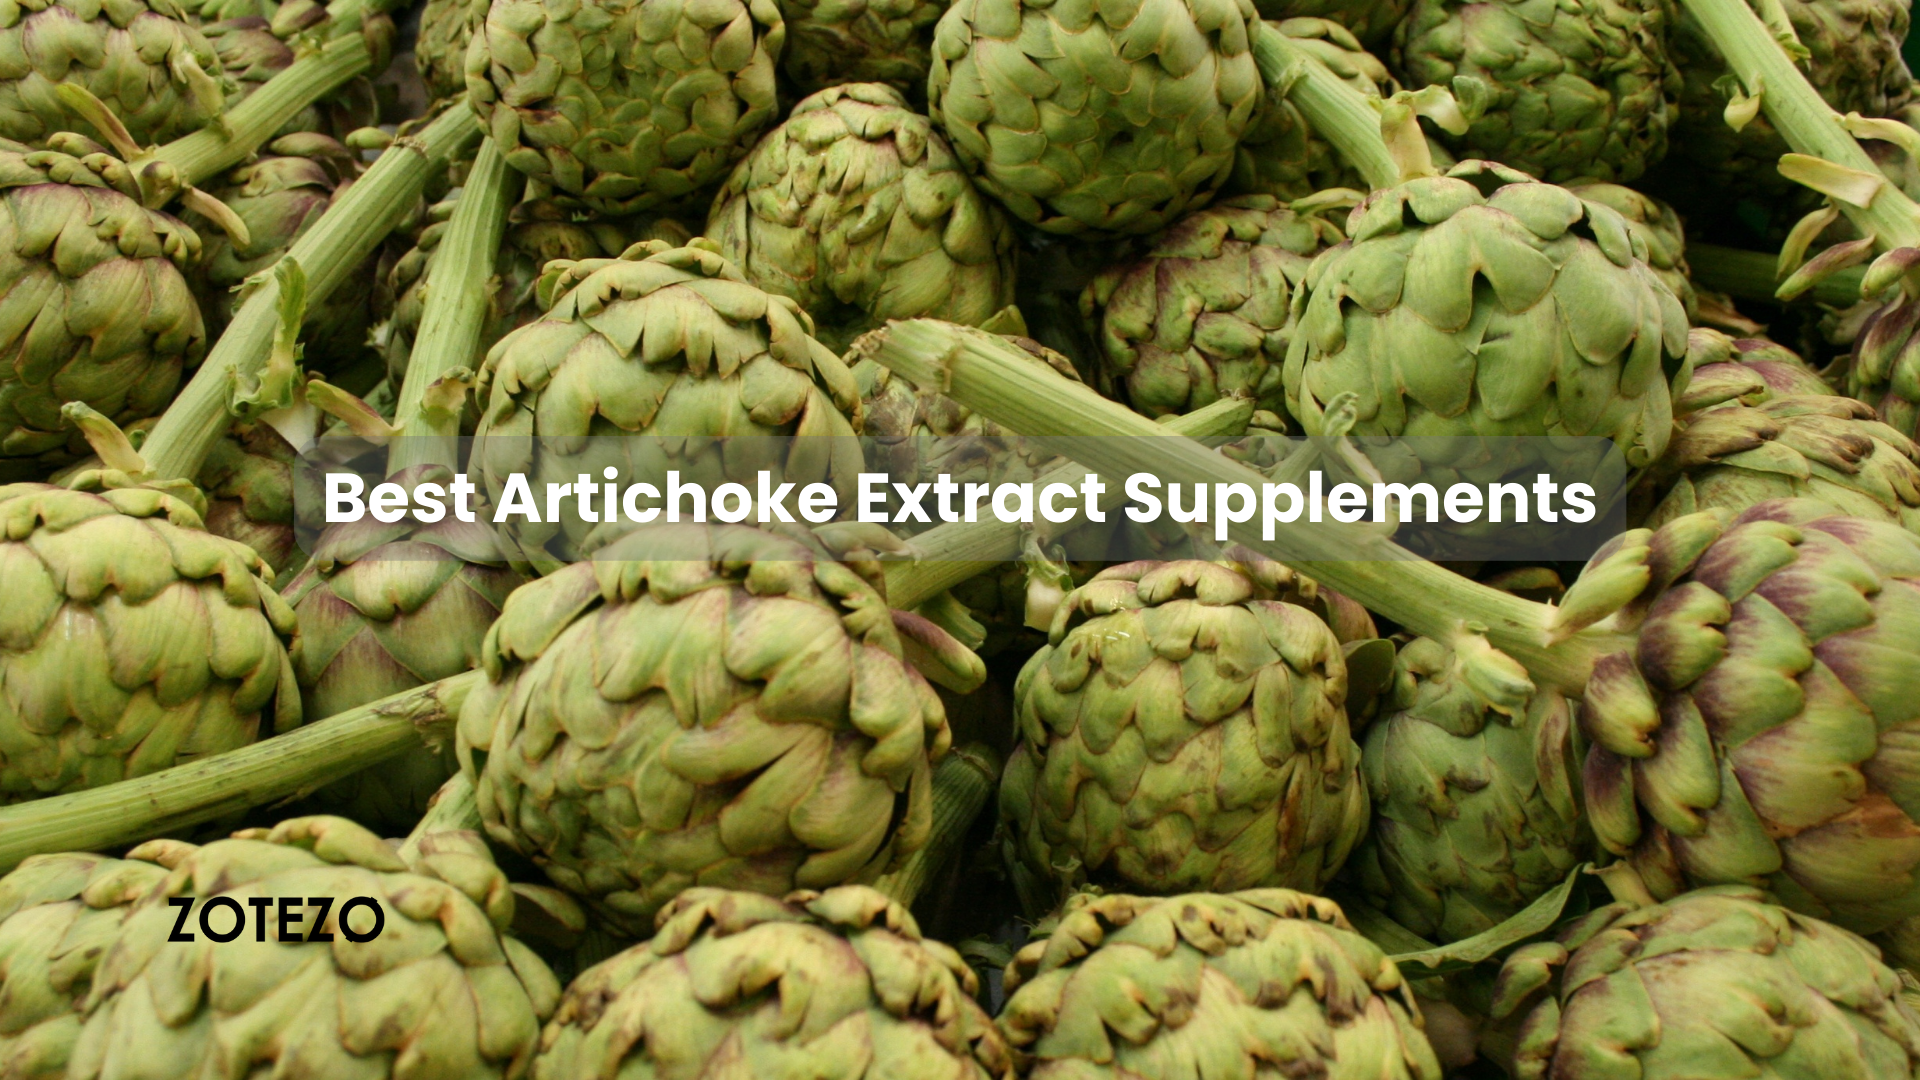 Artichoke Extract Supplements in Italy